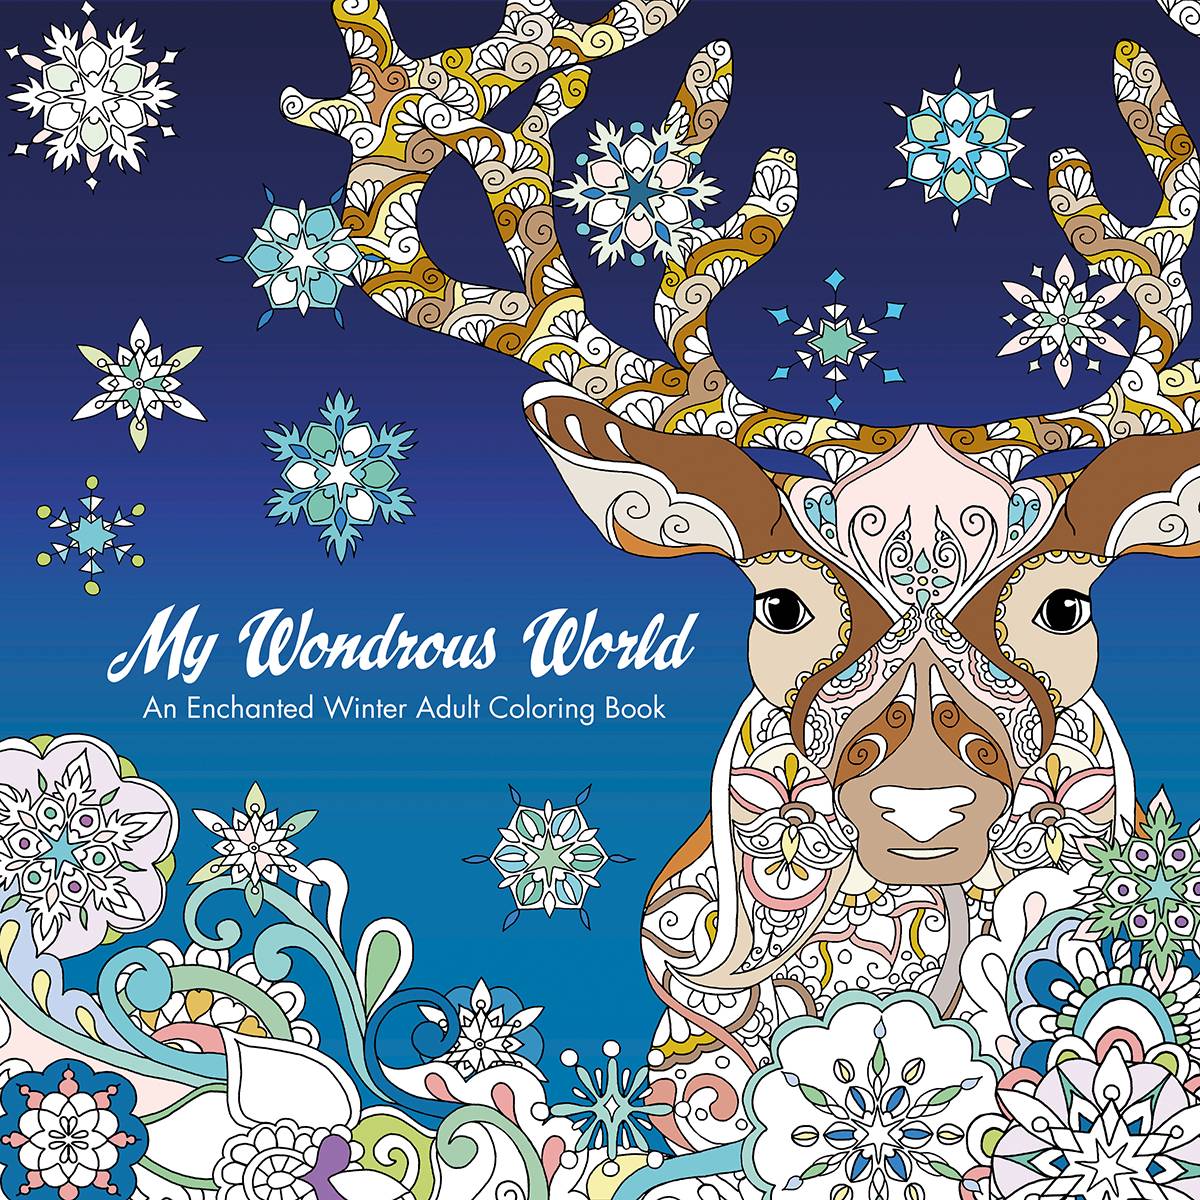 Wondrous World Enchanted Winter Adult Coloring Book Graphic Novel